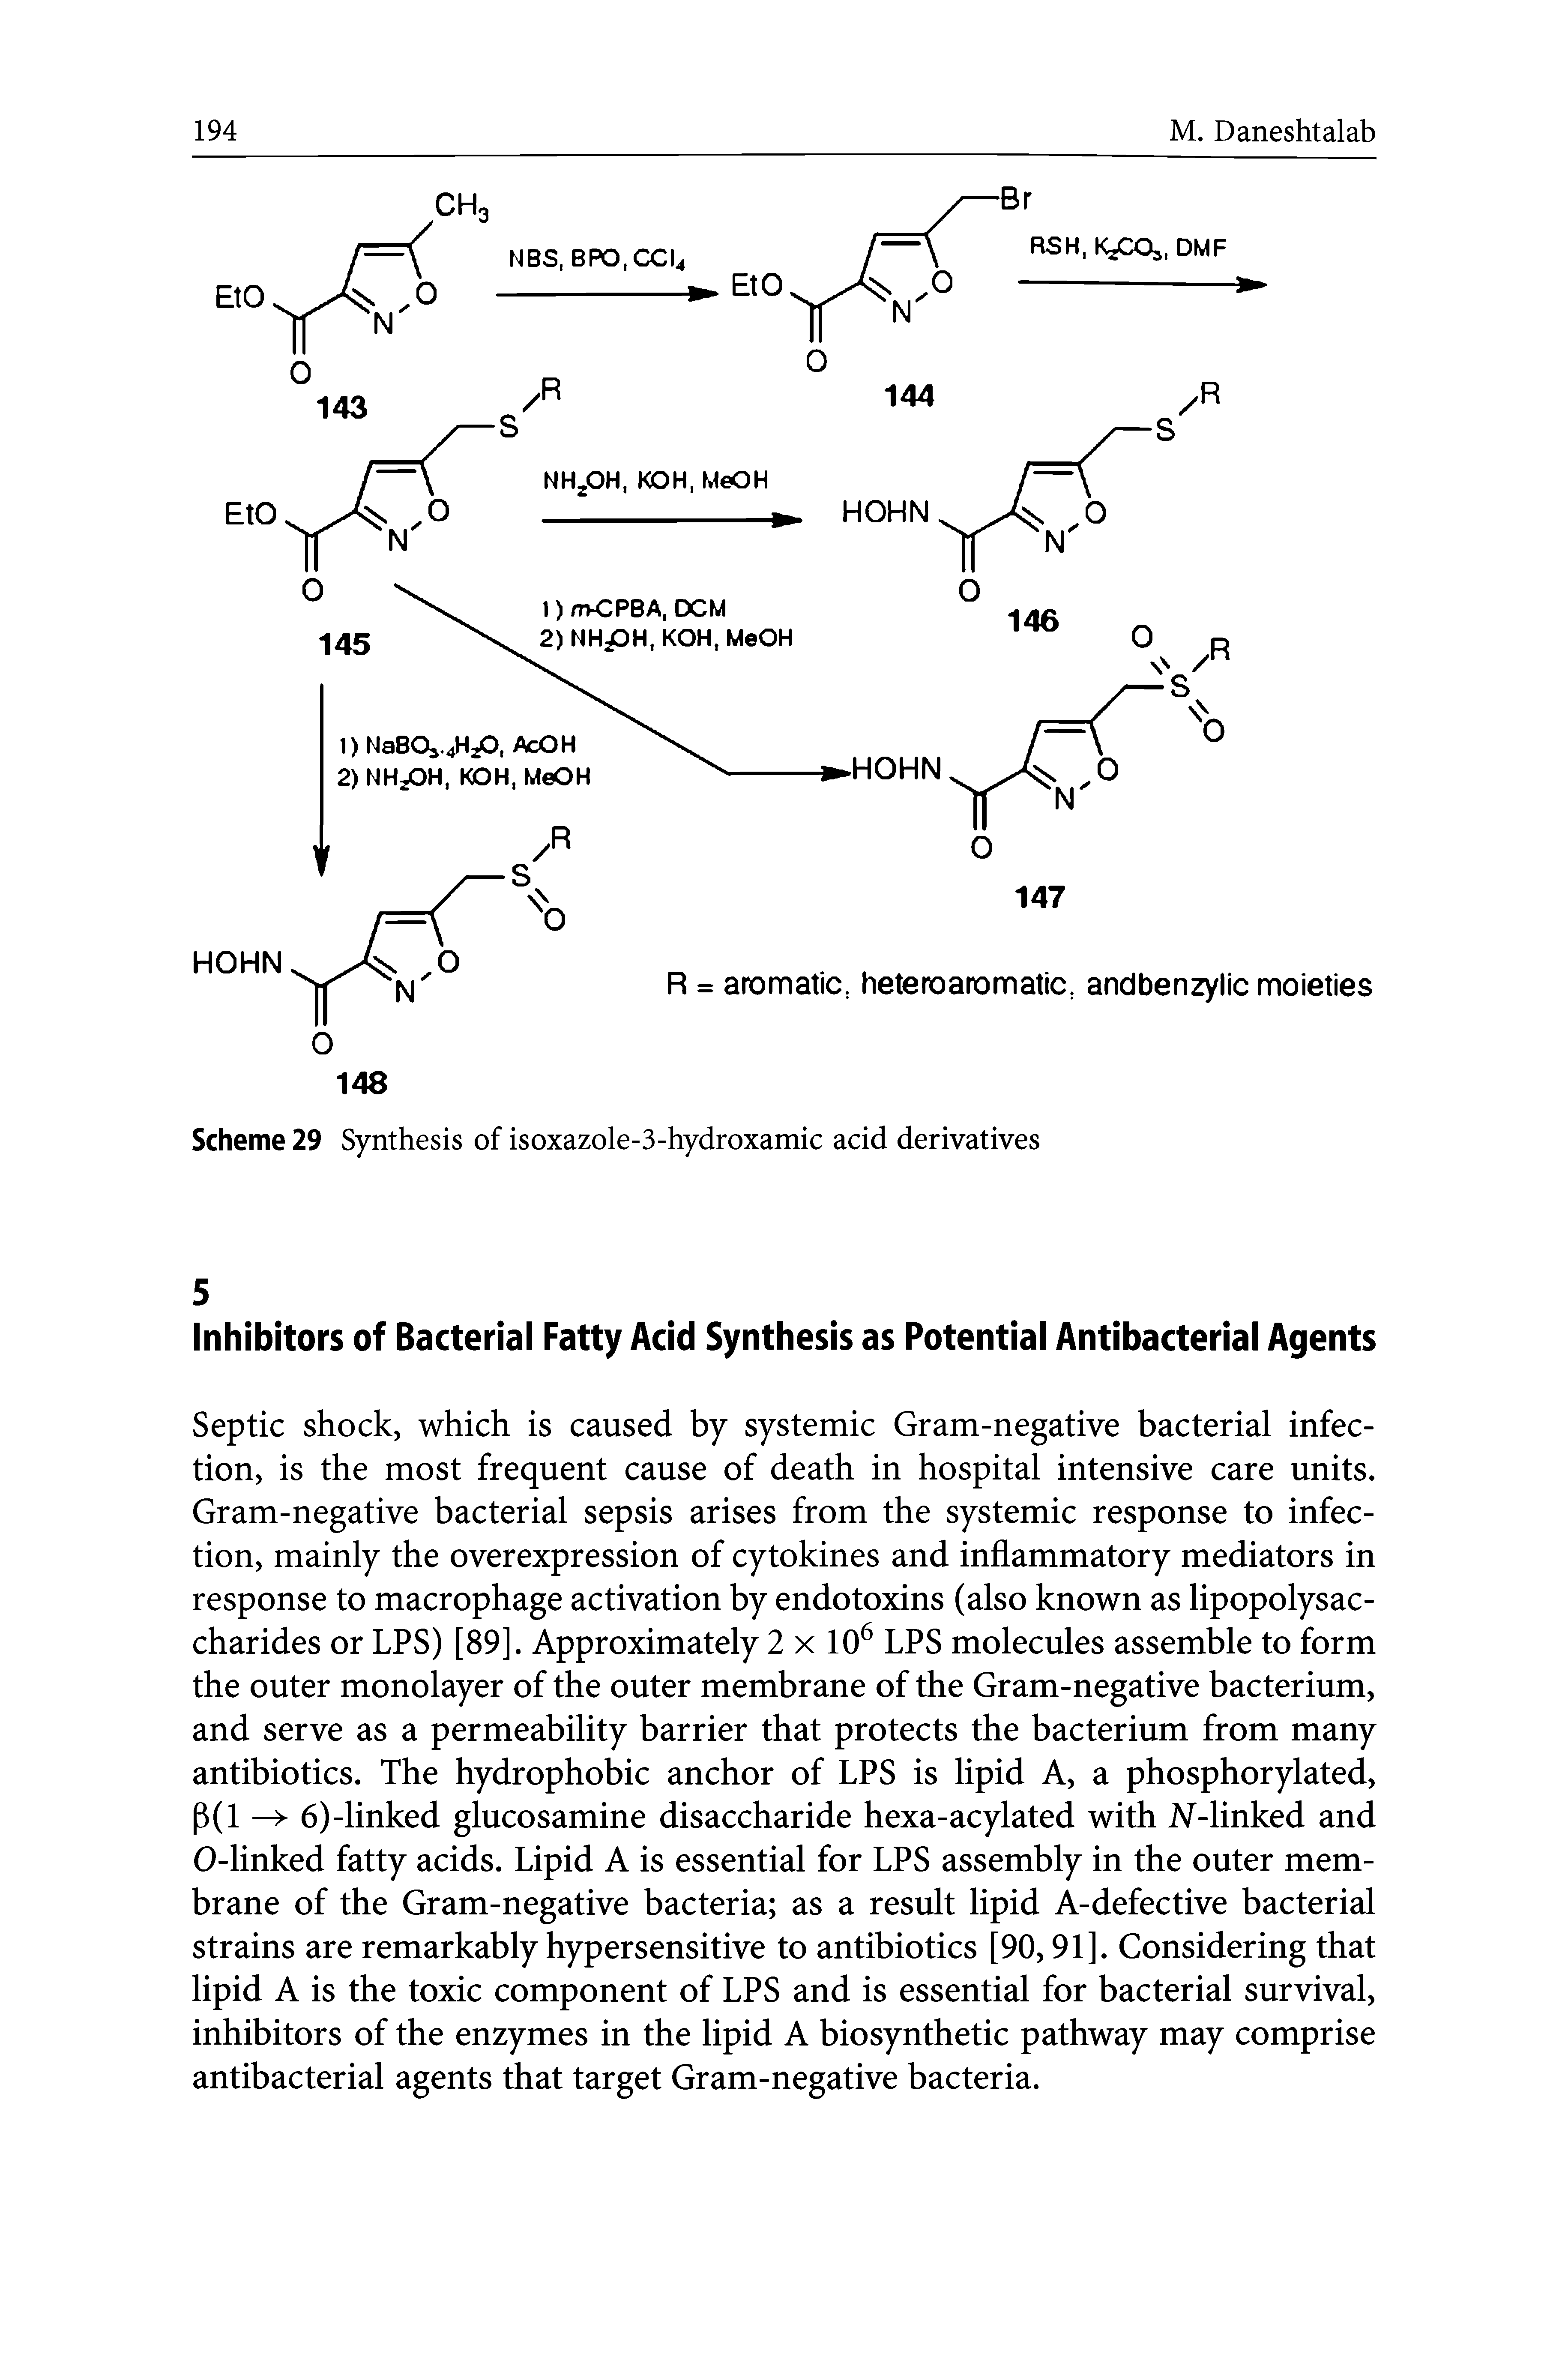 Scheme 29 Synthesis of isoxazole-3-hydroxamic acid derivatives...